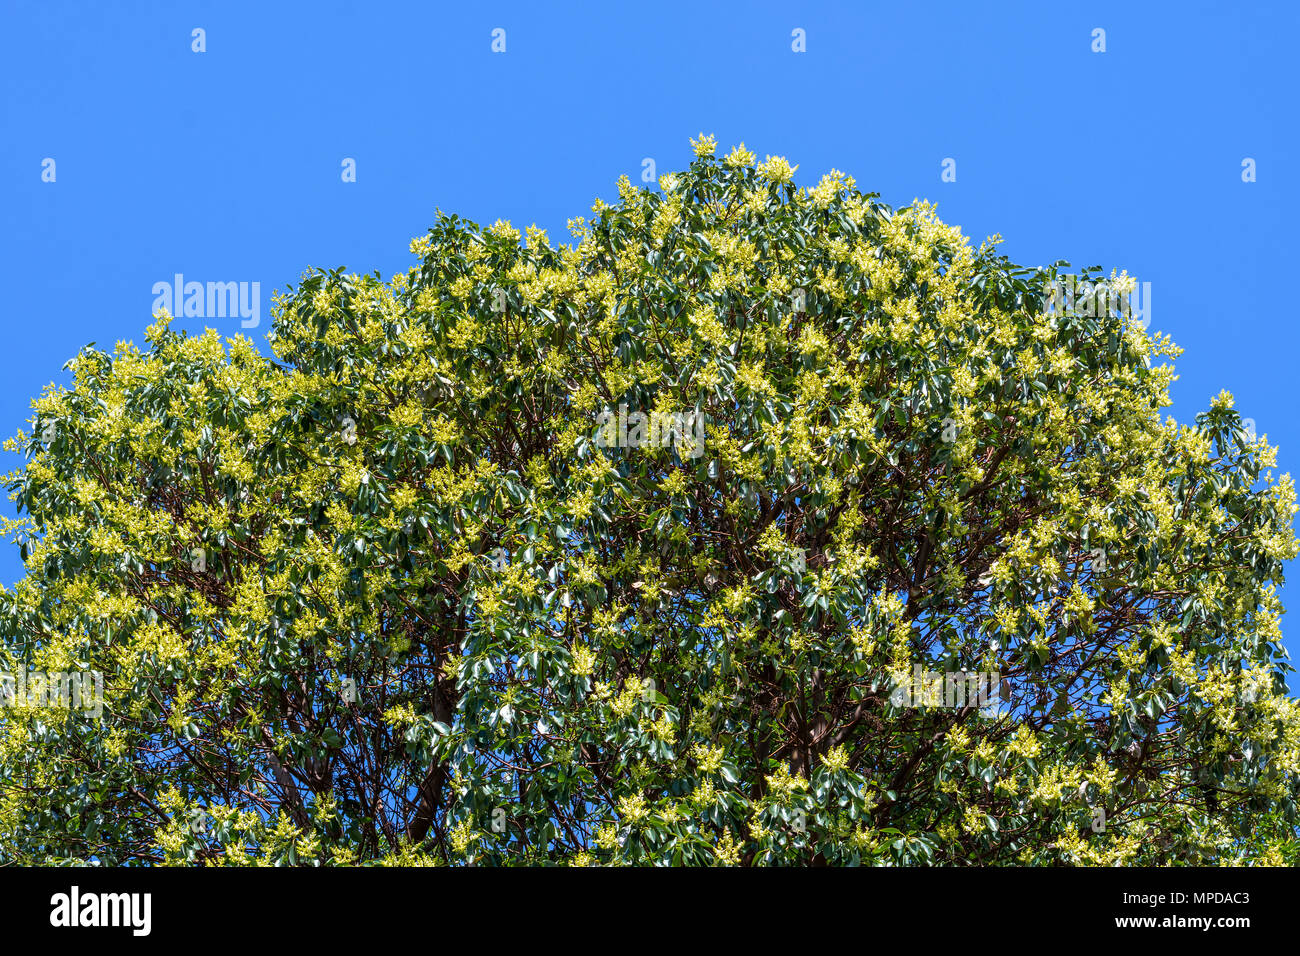 Arbutus Baum in Blüte, Hornby Island, BC, Kanada. Stockfoto